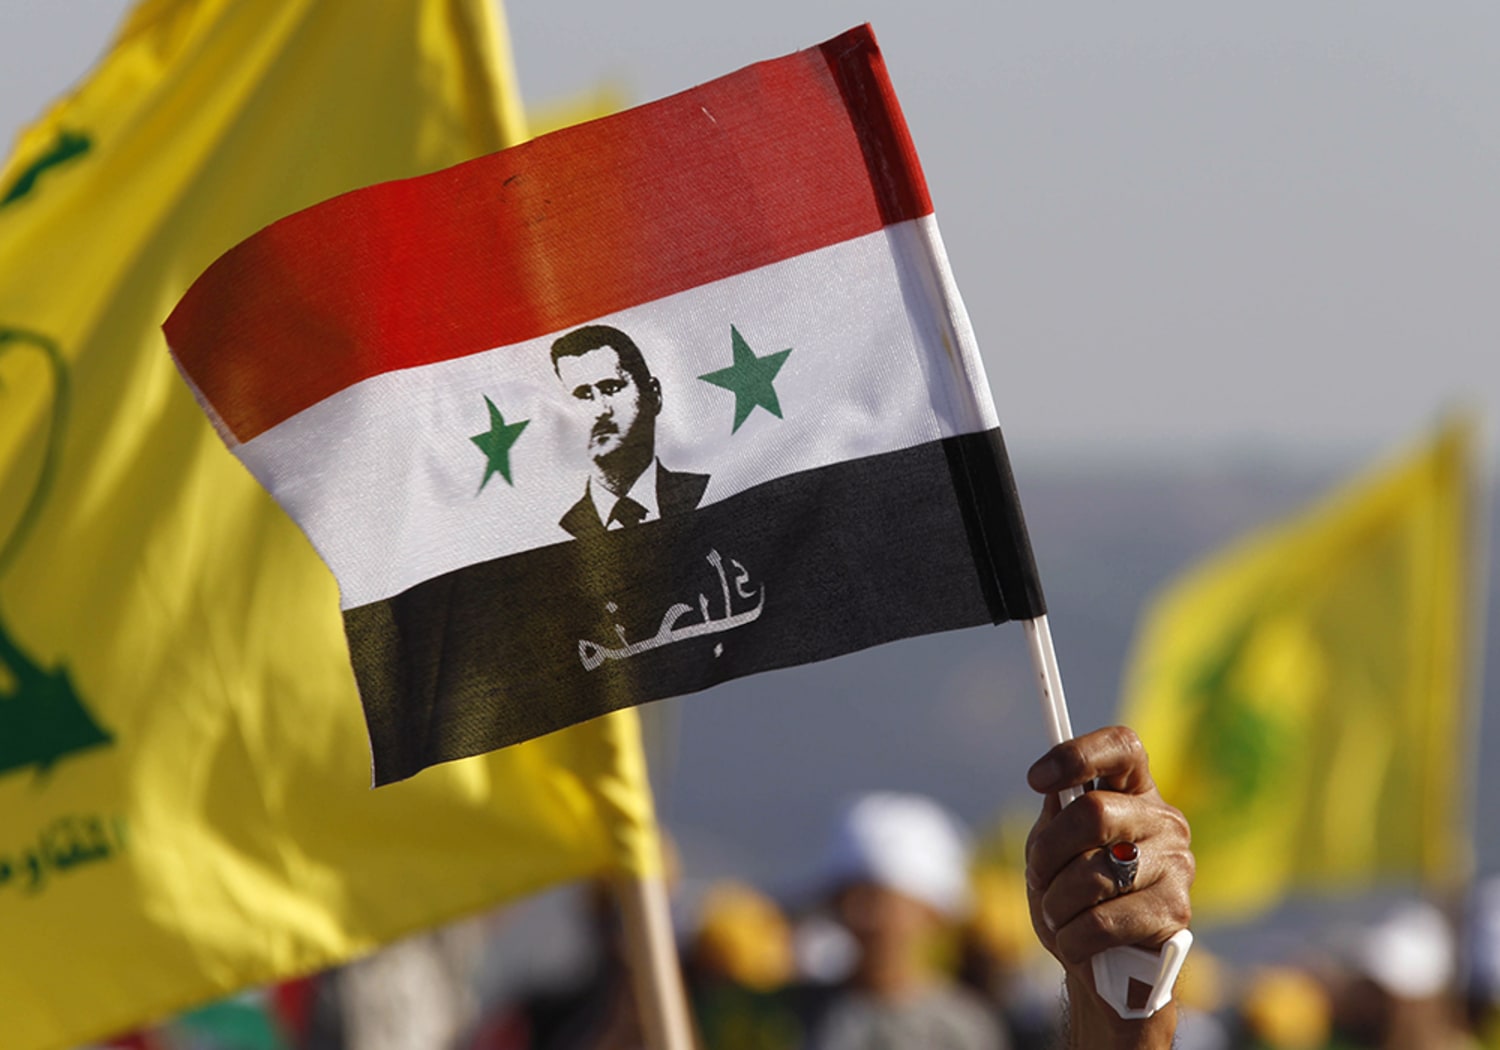 https://media-cldnry.s-nbcnews.com/image/upload/t_fit-1500w,f_auto,q_auto:best/streams/2013/October/131031/8C9553327-g-cvr-131031-syria-hezbollah-flags-545p.jpg